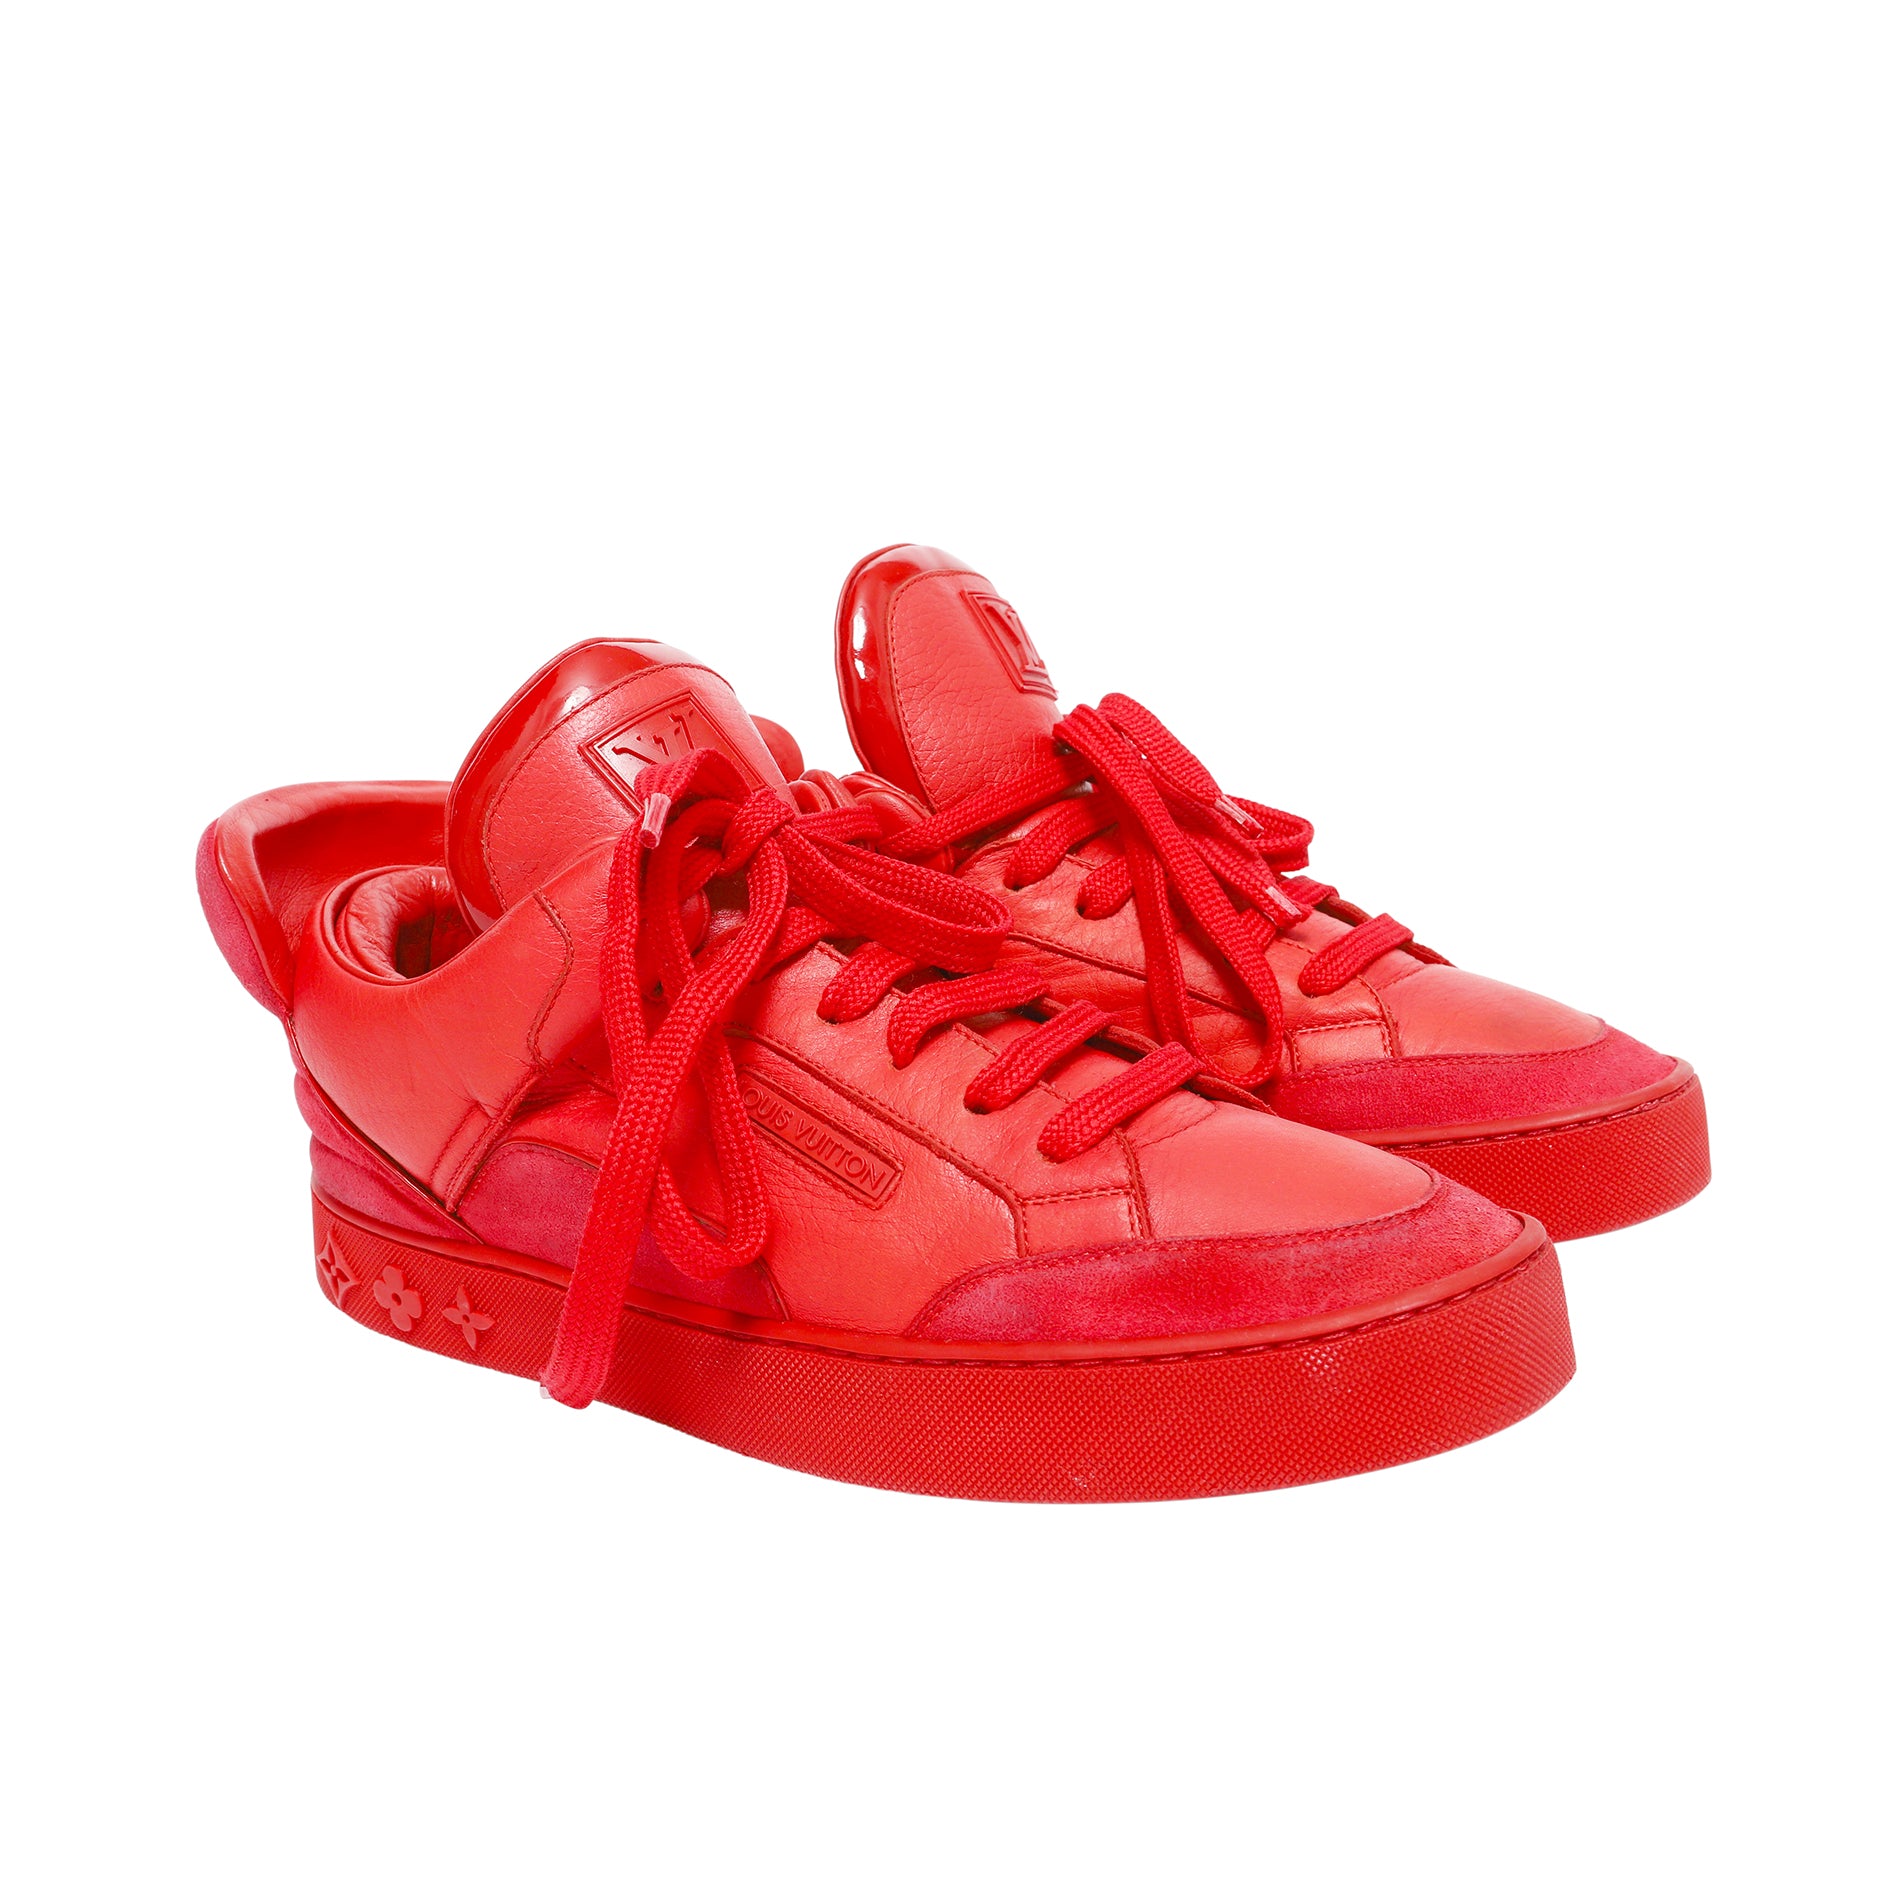 Kanye's New Louis Vuitton Shoe